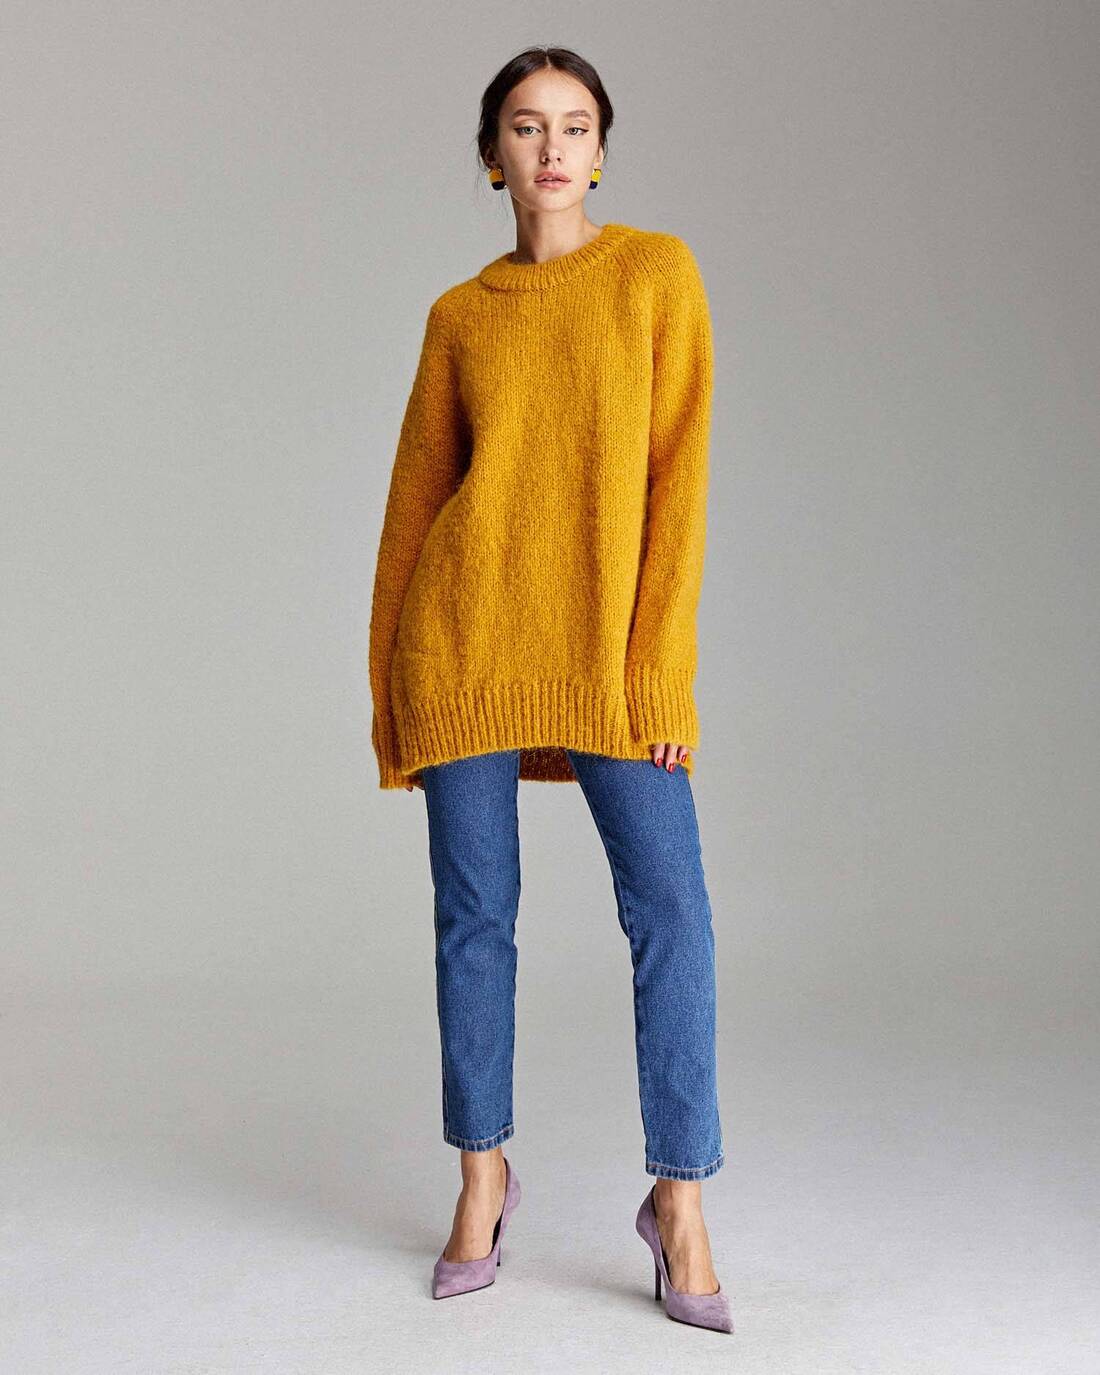 Oversize jacqurd knit sweater